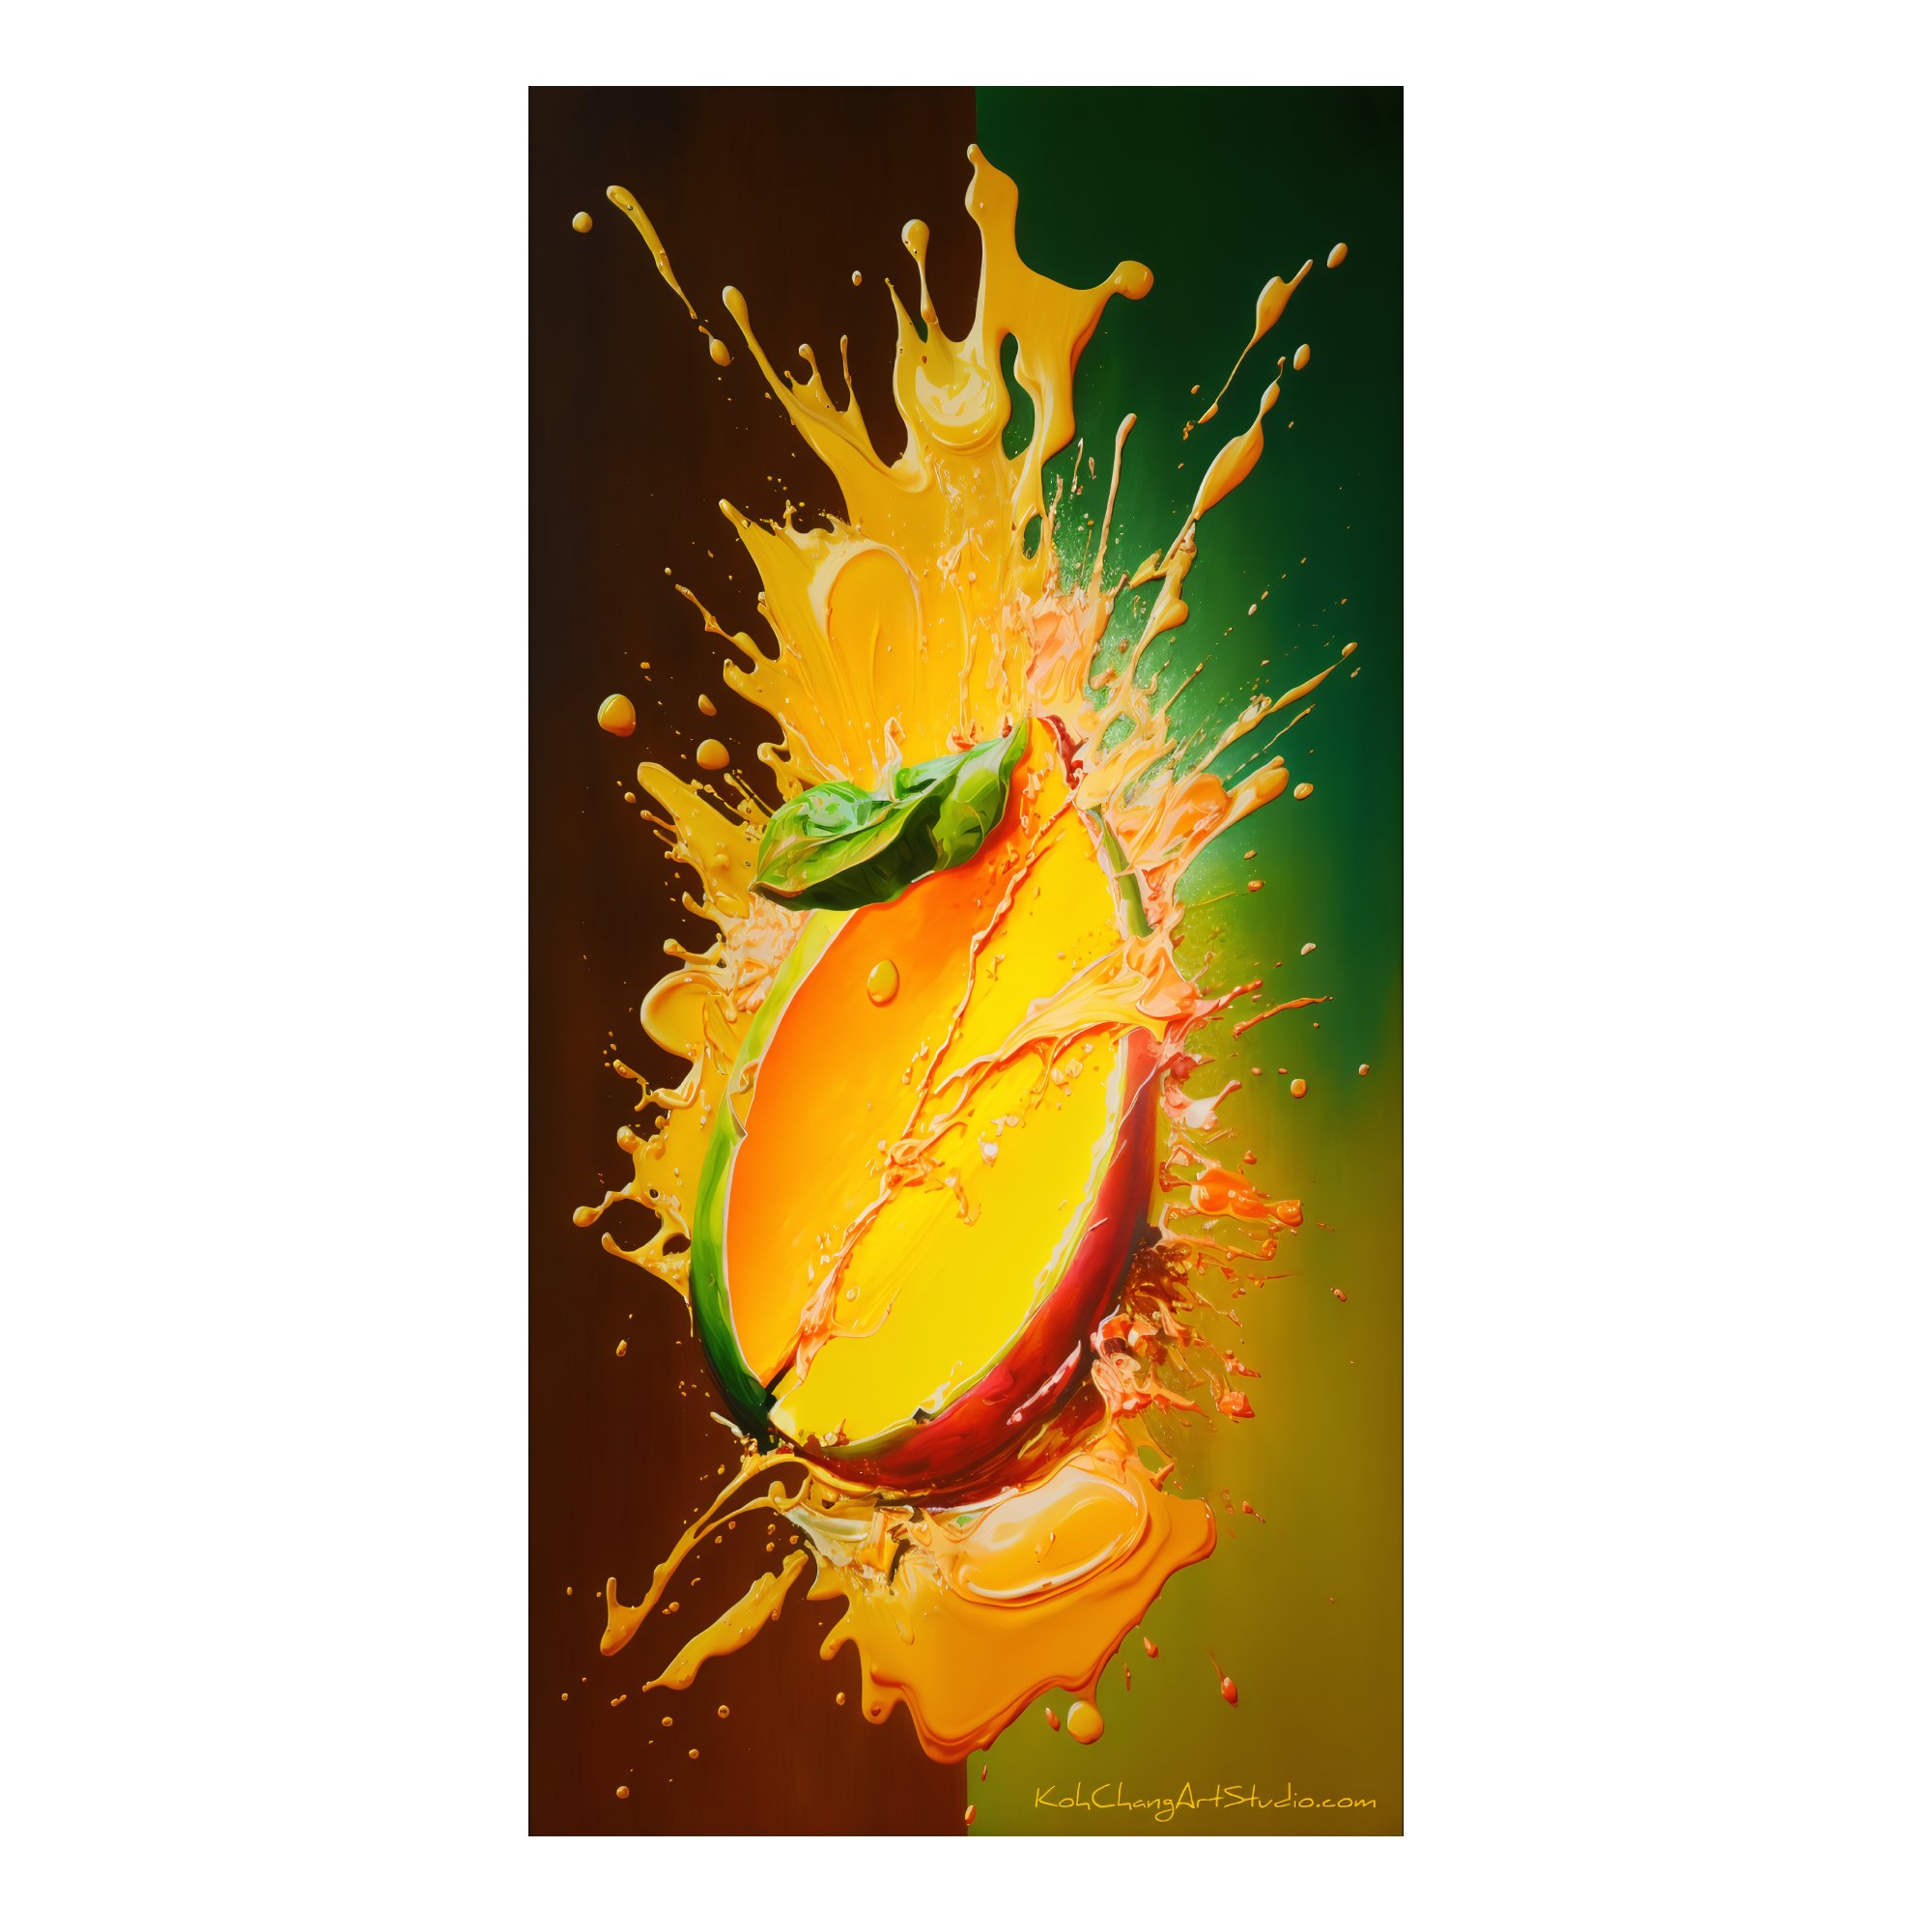 MANGO MAGIC Design - Vibrant mango surrounded by its juice, capturing the essence of tropical sweetness.